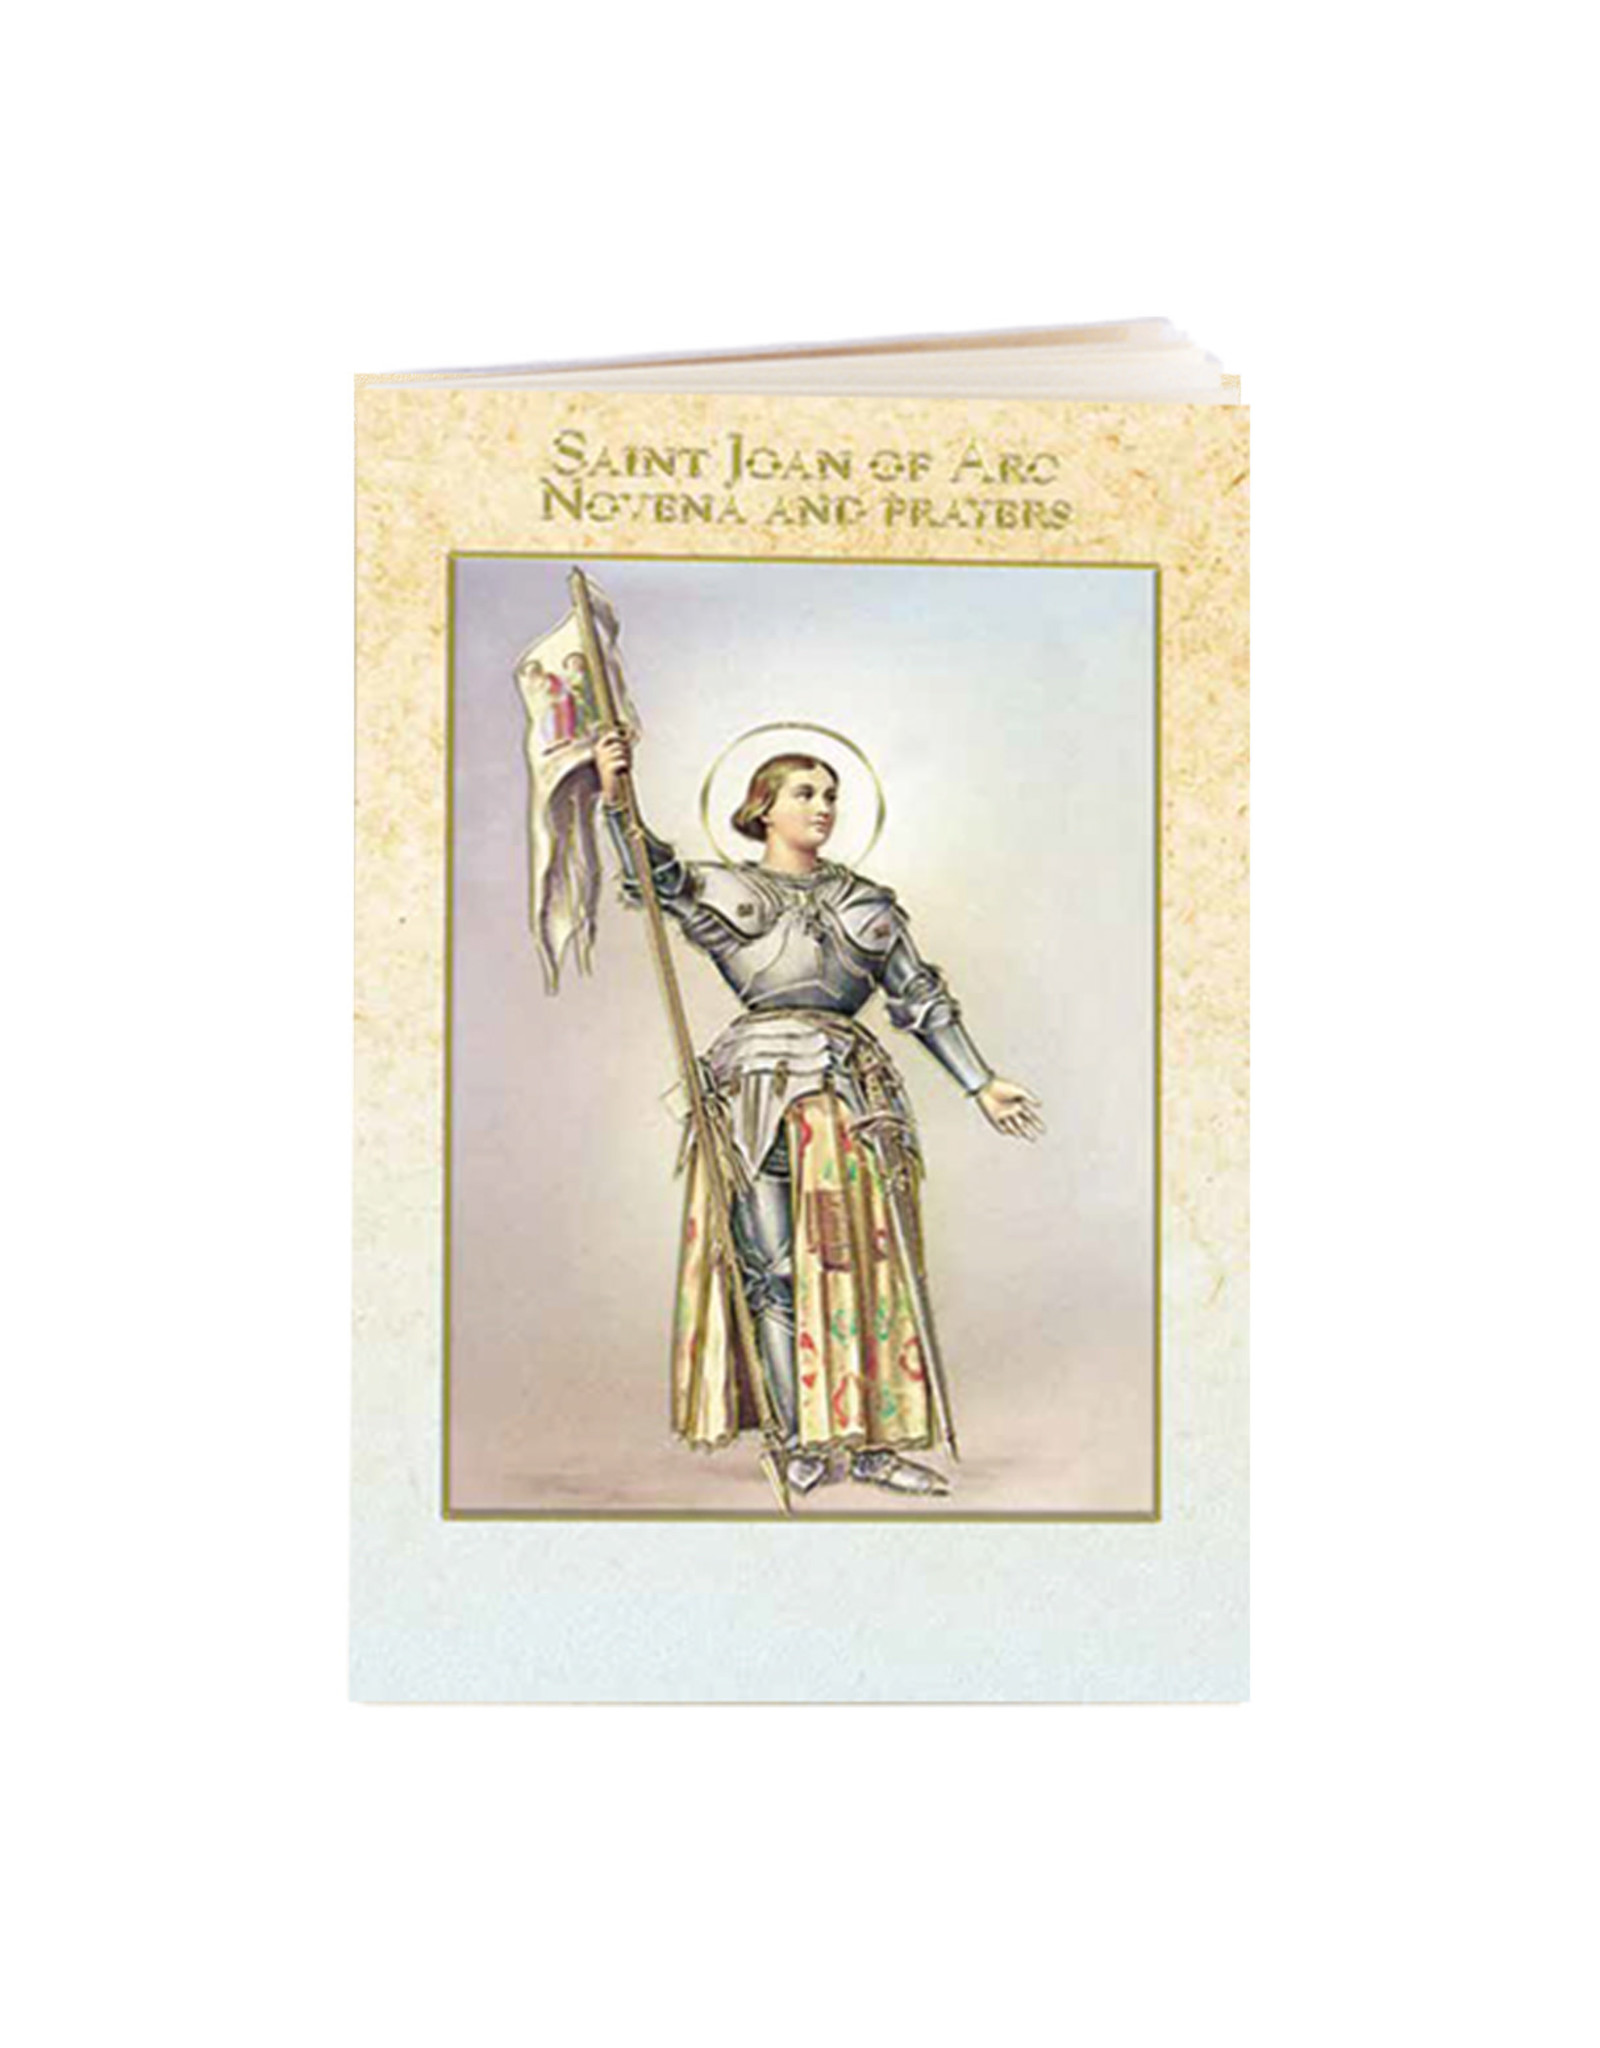 Hirten Novena Prayer Book - St. Joan of Arc